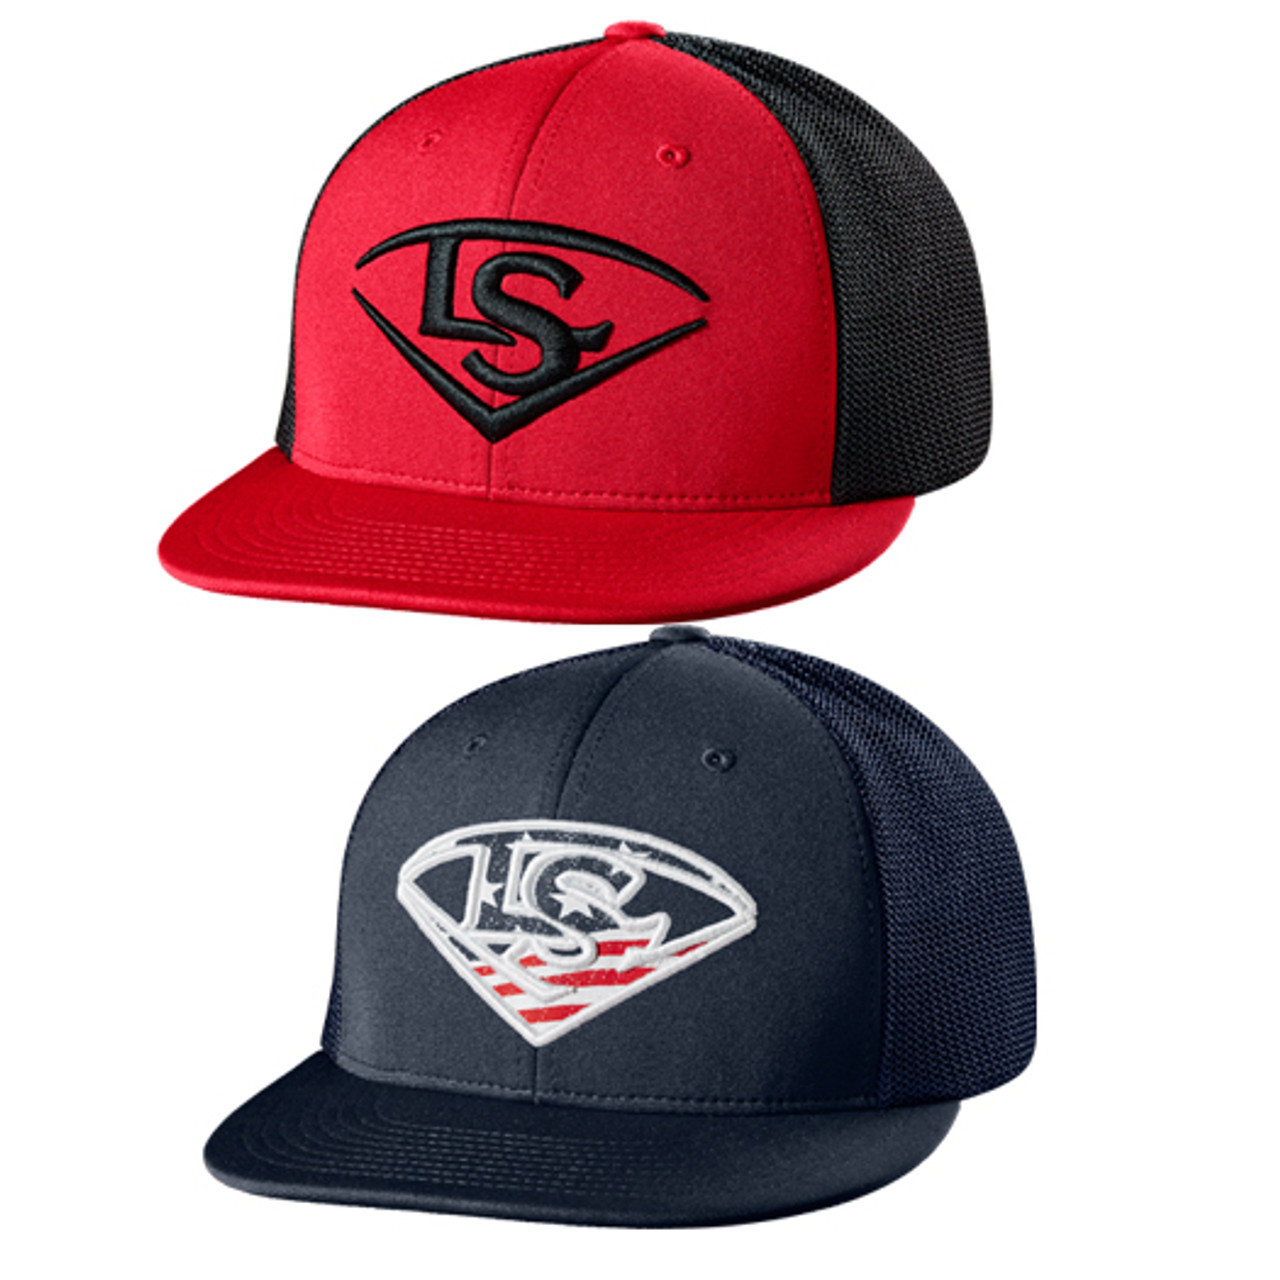 Louisville Slugger TPS Flexfit Hat (Black-White)